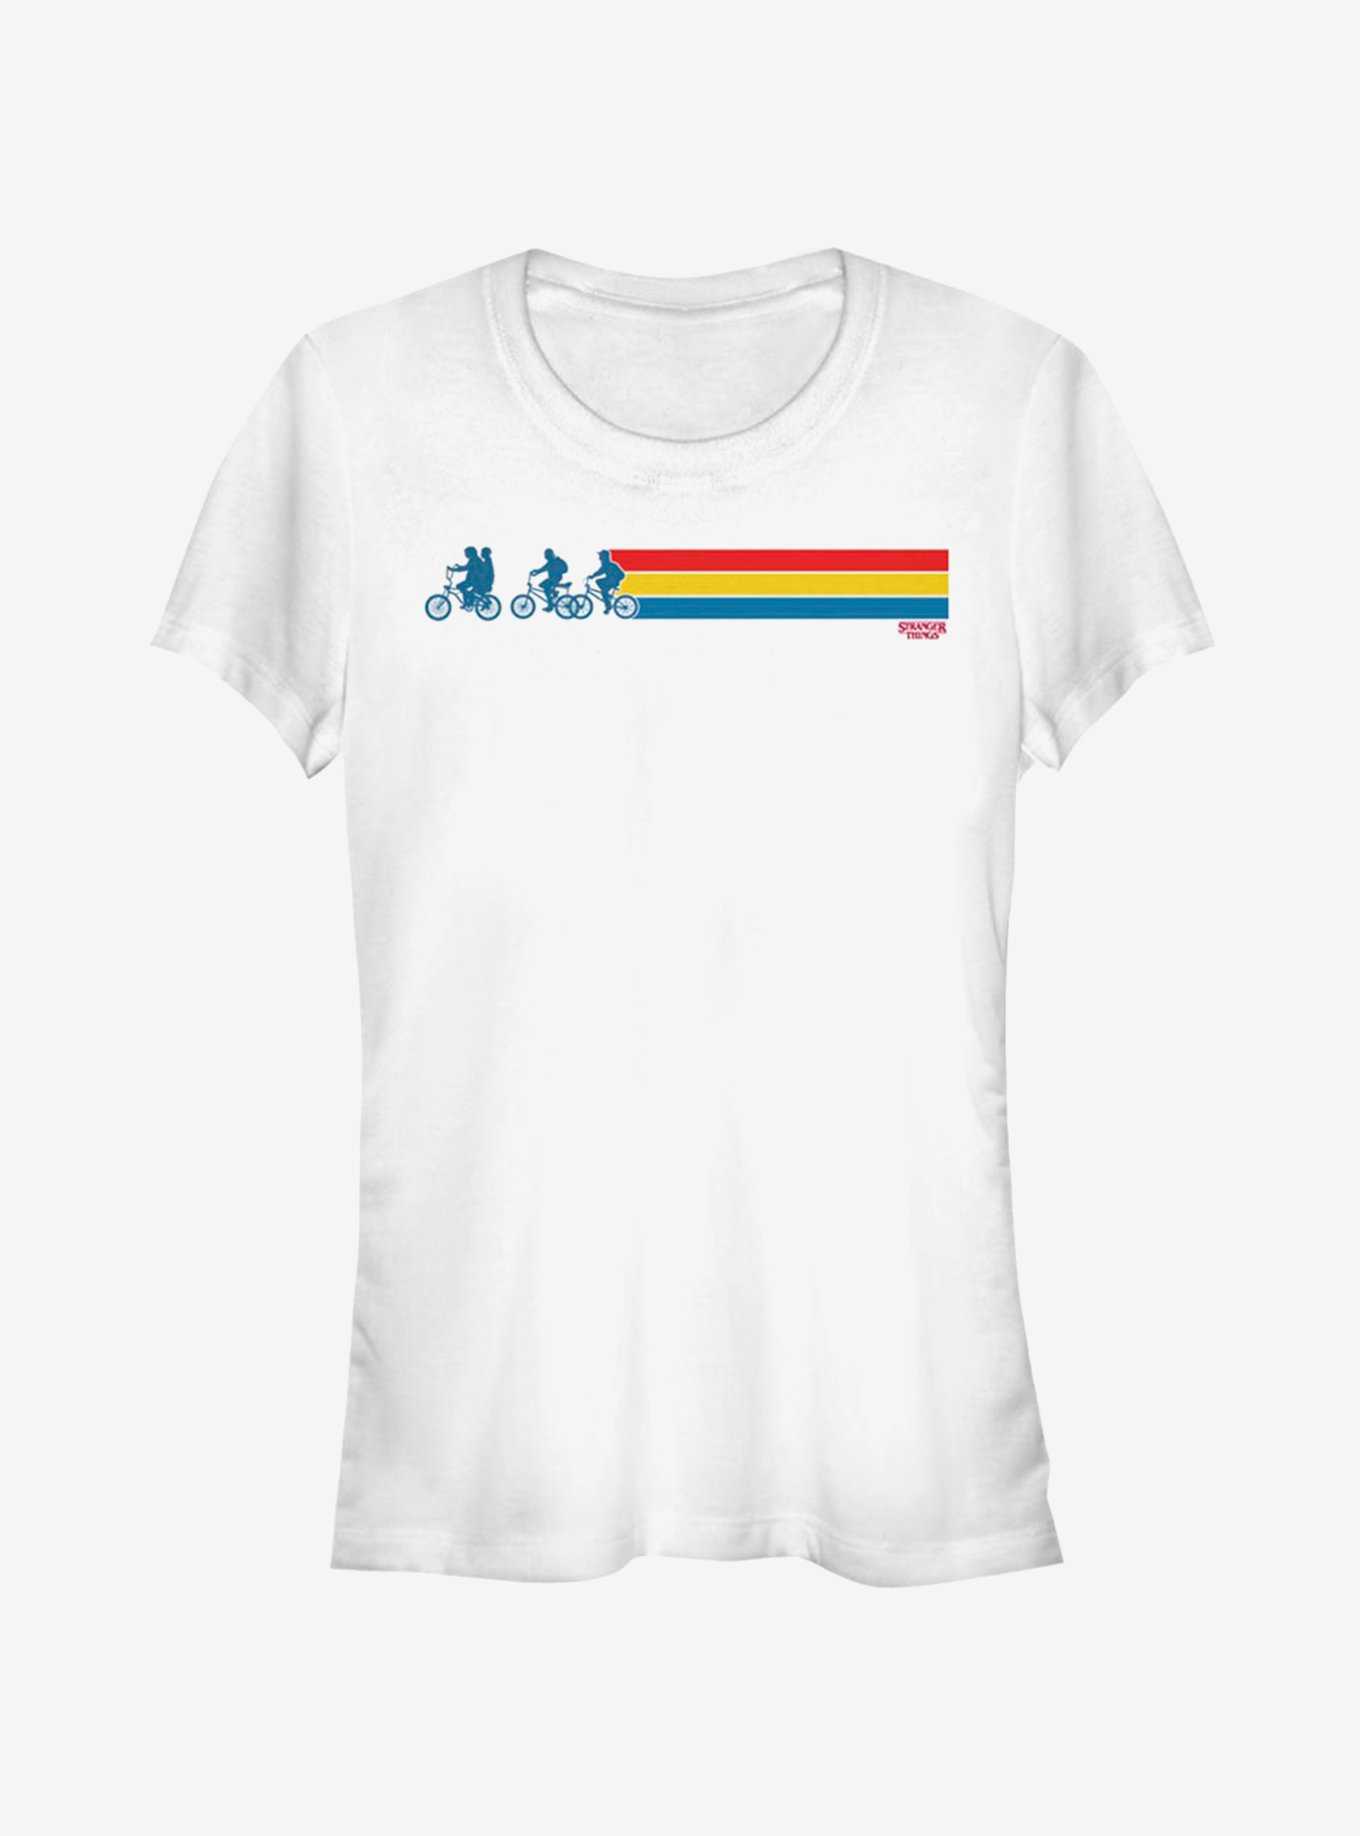 Stranger Things Bikes and Stripes Girls T-Shirt, , hi-res